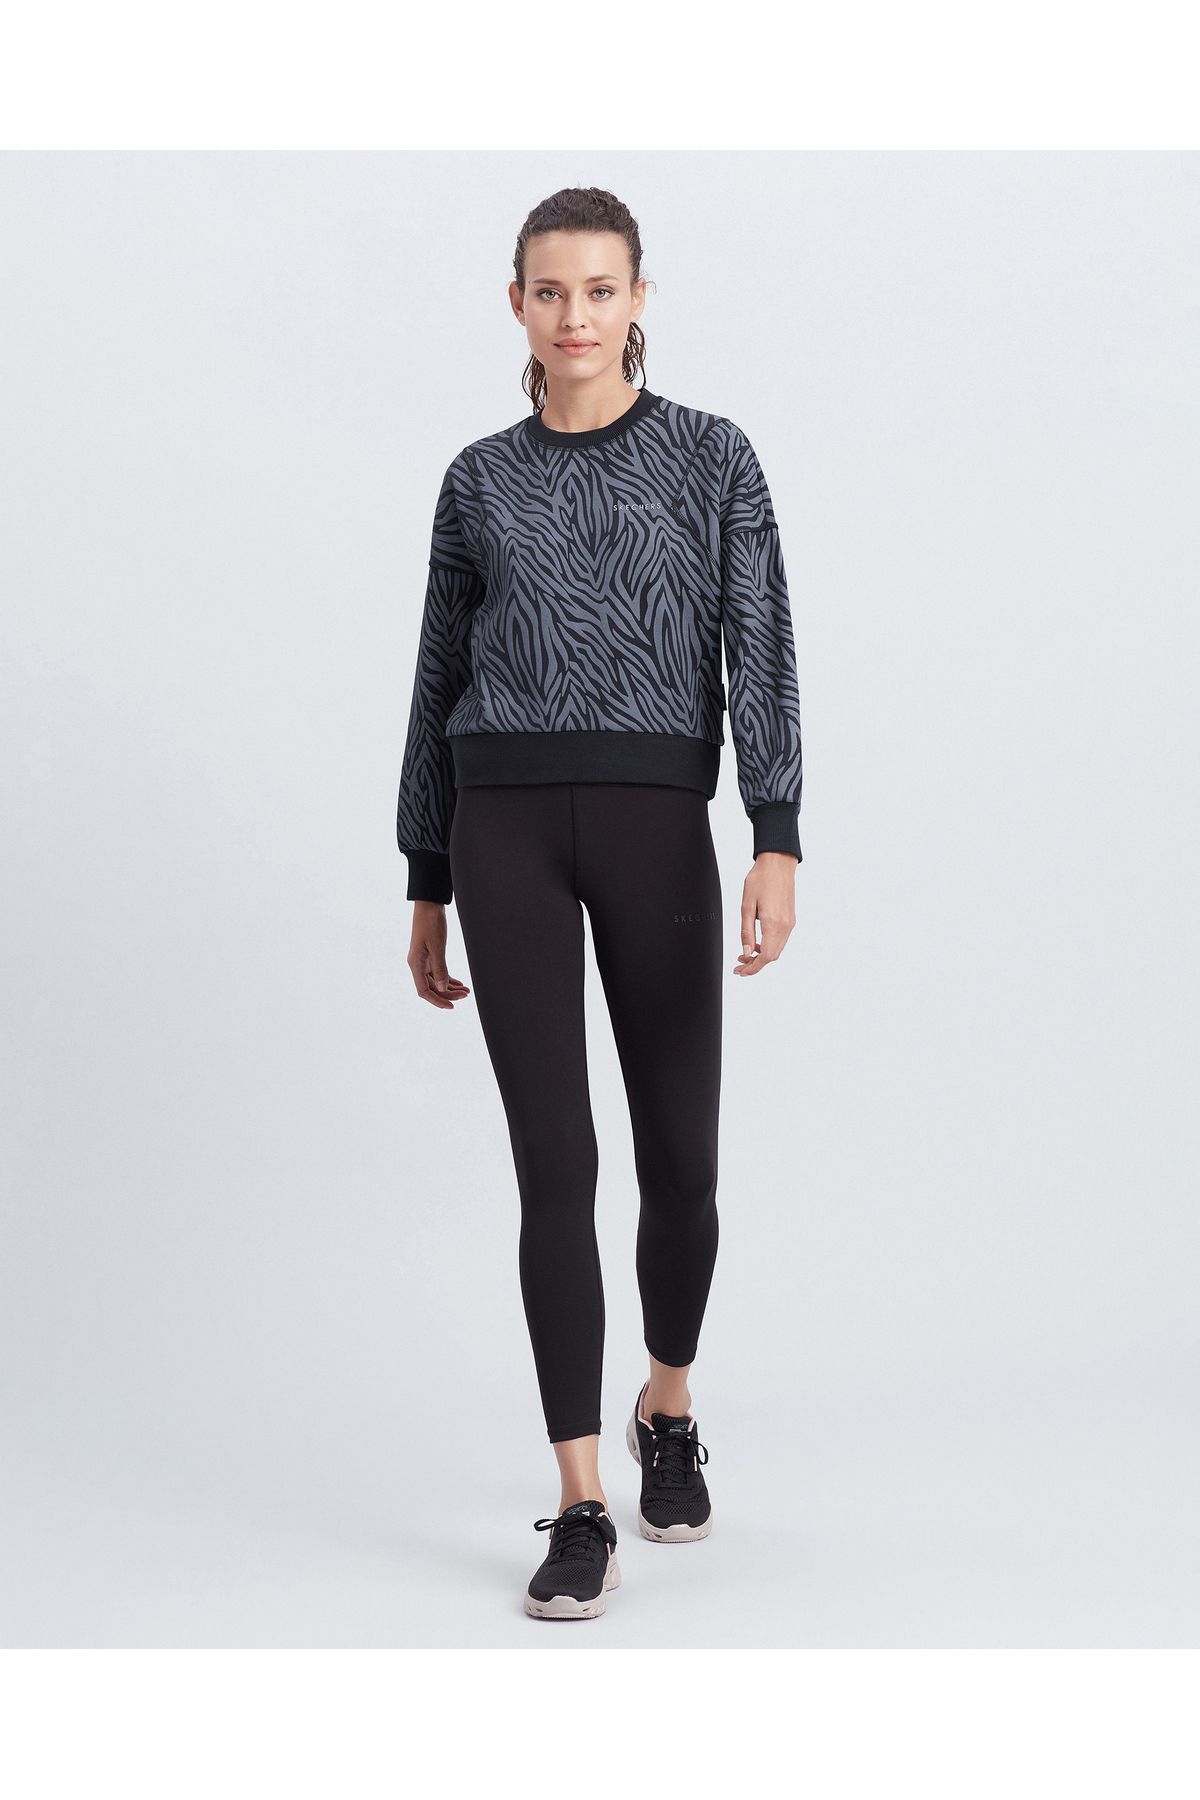 Skechers W Printed Sweatshirt Kadın Siyah Sweatshirt S212057-001